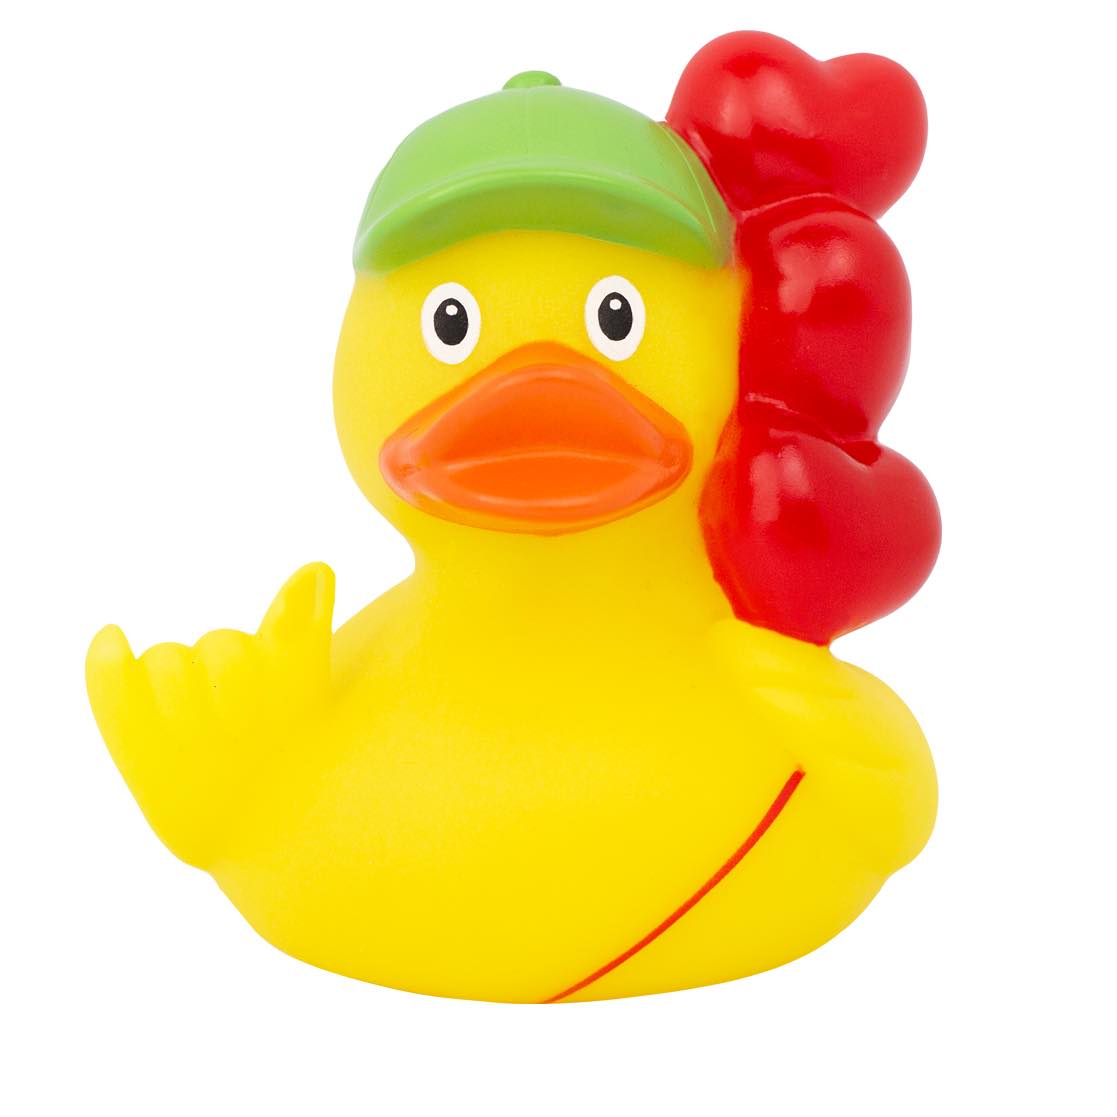 Balloon Rubber Duck  Buy premium rubber ducks online - world wide delivery!